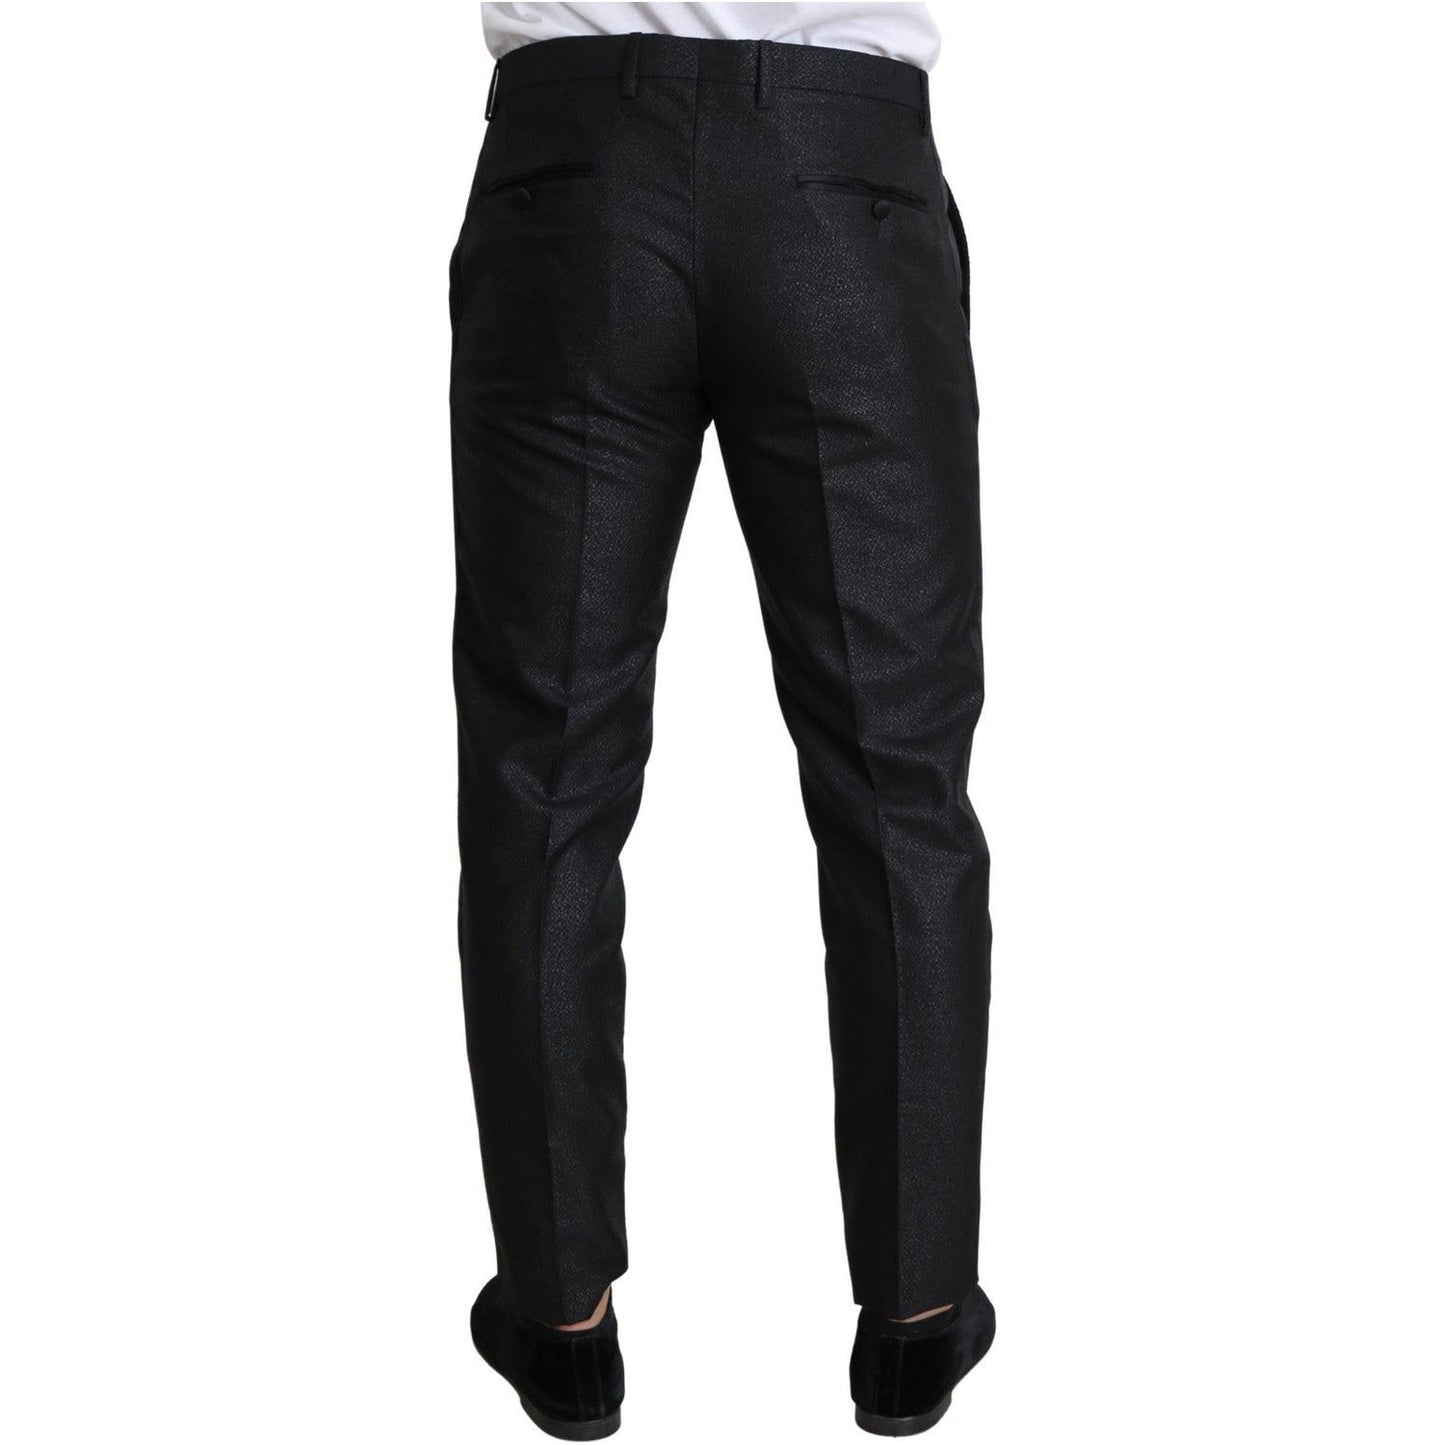 Dolce & Gabbana Elegant Metallic Black Dress Pants Jeans & Pants black-metallic-skinny-trouser-dress IMG_2240-scaled-a6d92c4a-e17.jpg